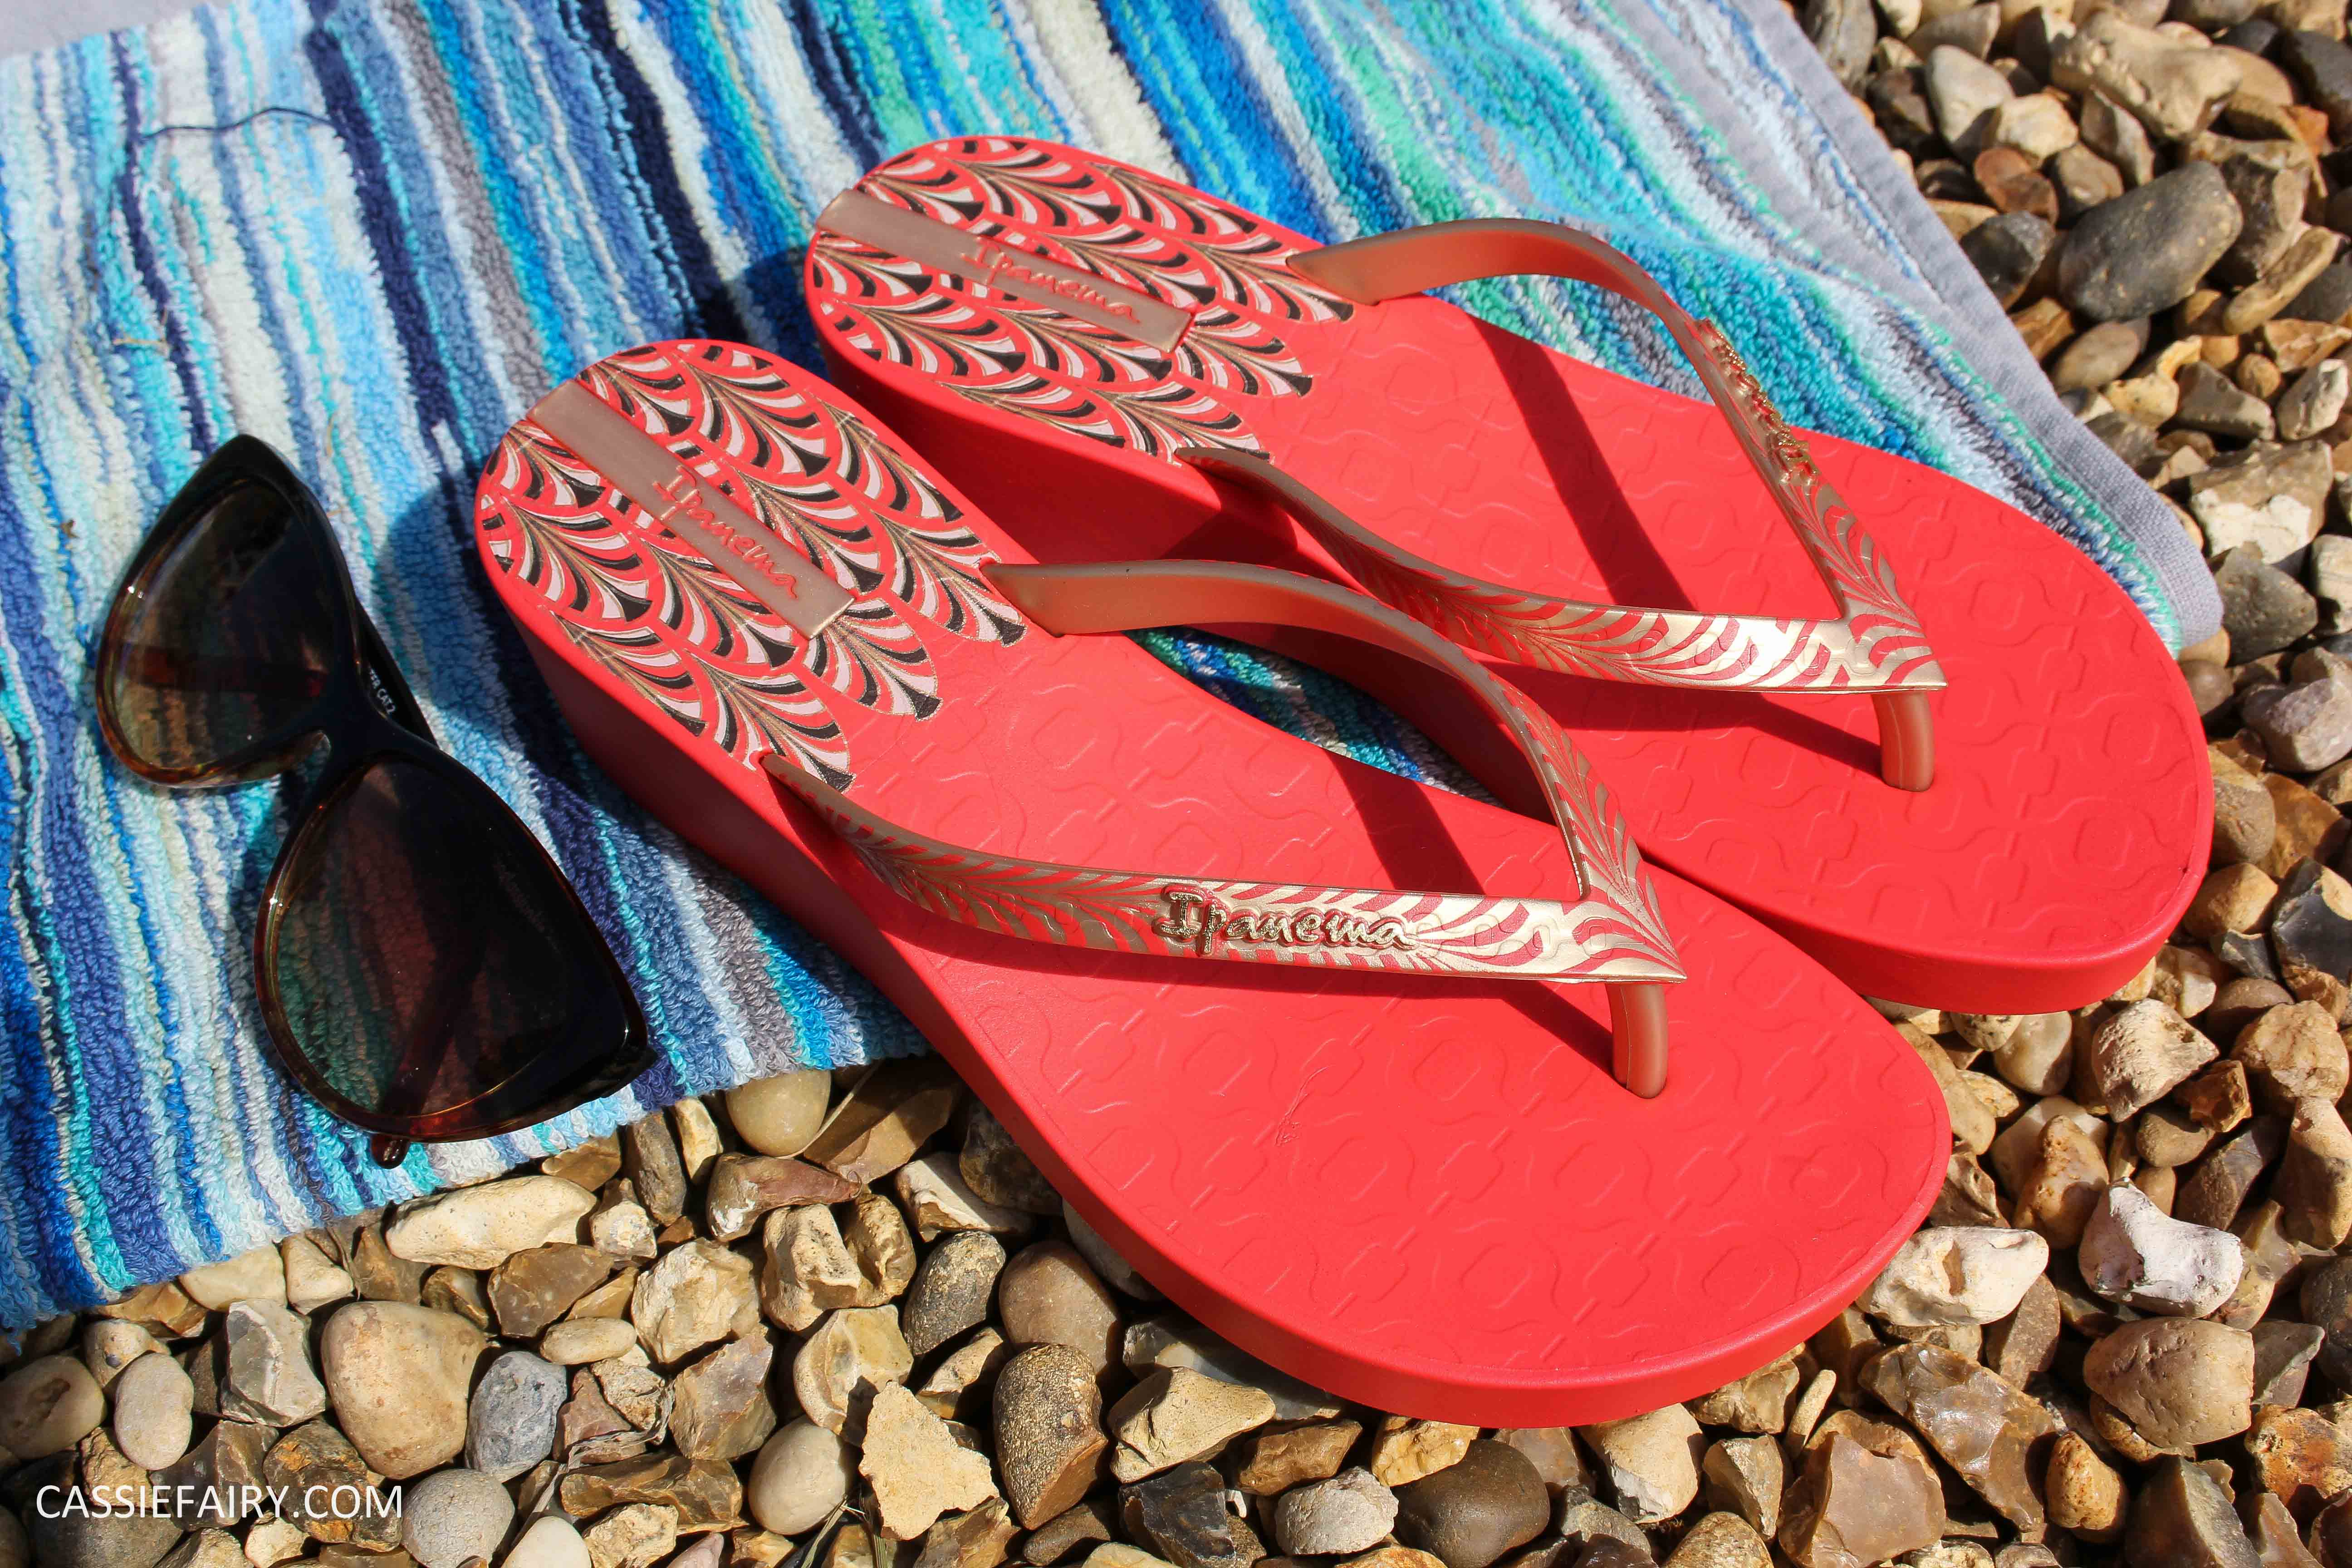 https://cassiefairy.com/wp-content/uploads/2015/06/tuesday-shoesdat-summer-flip-flop-fashion-wedge-shoes-51.jpg